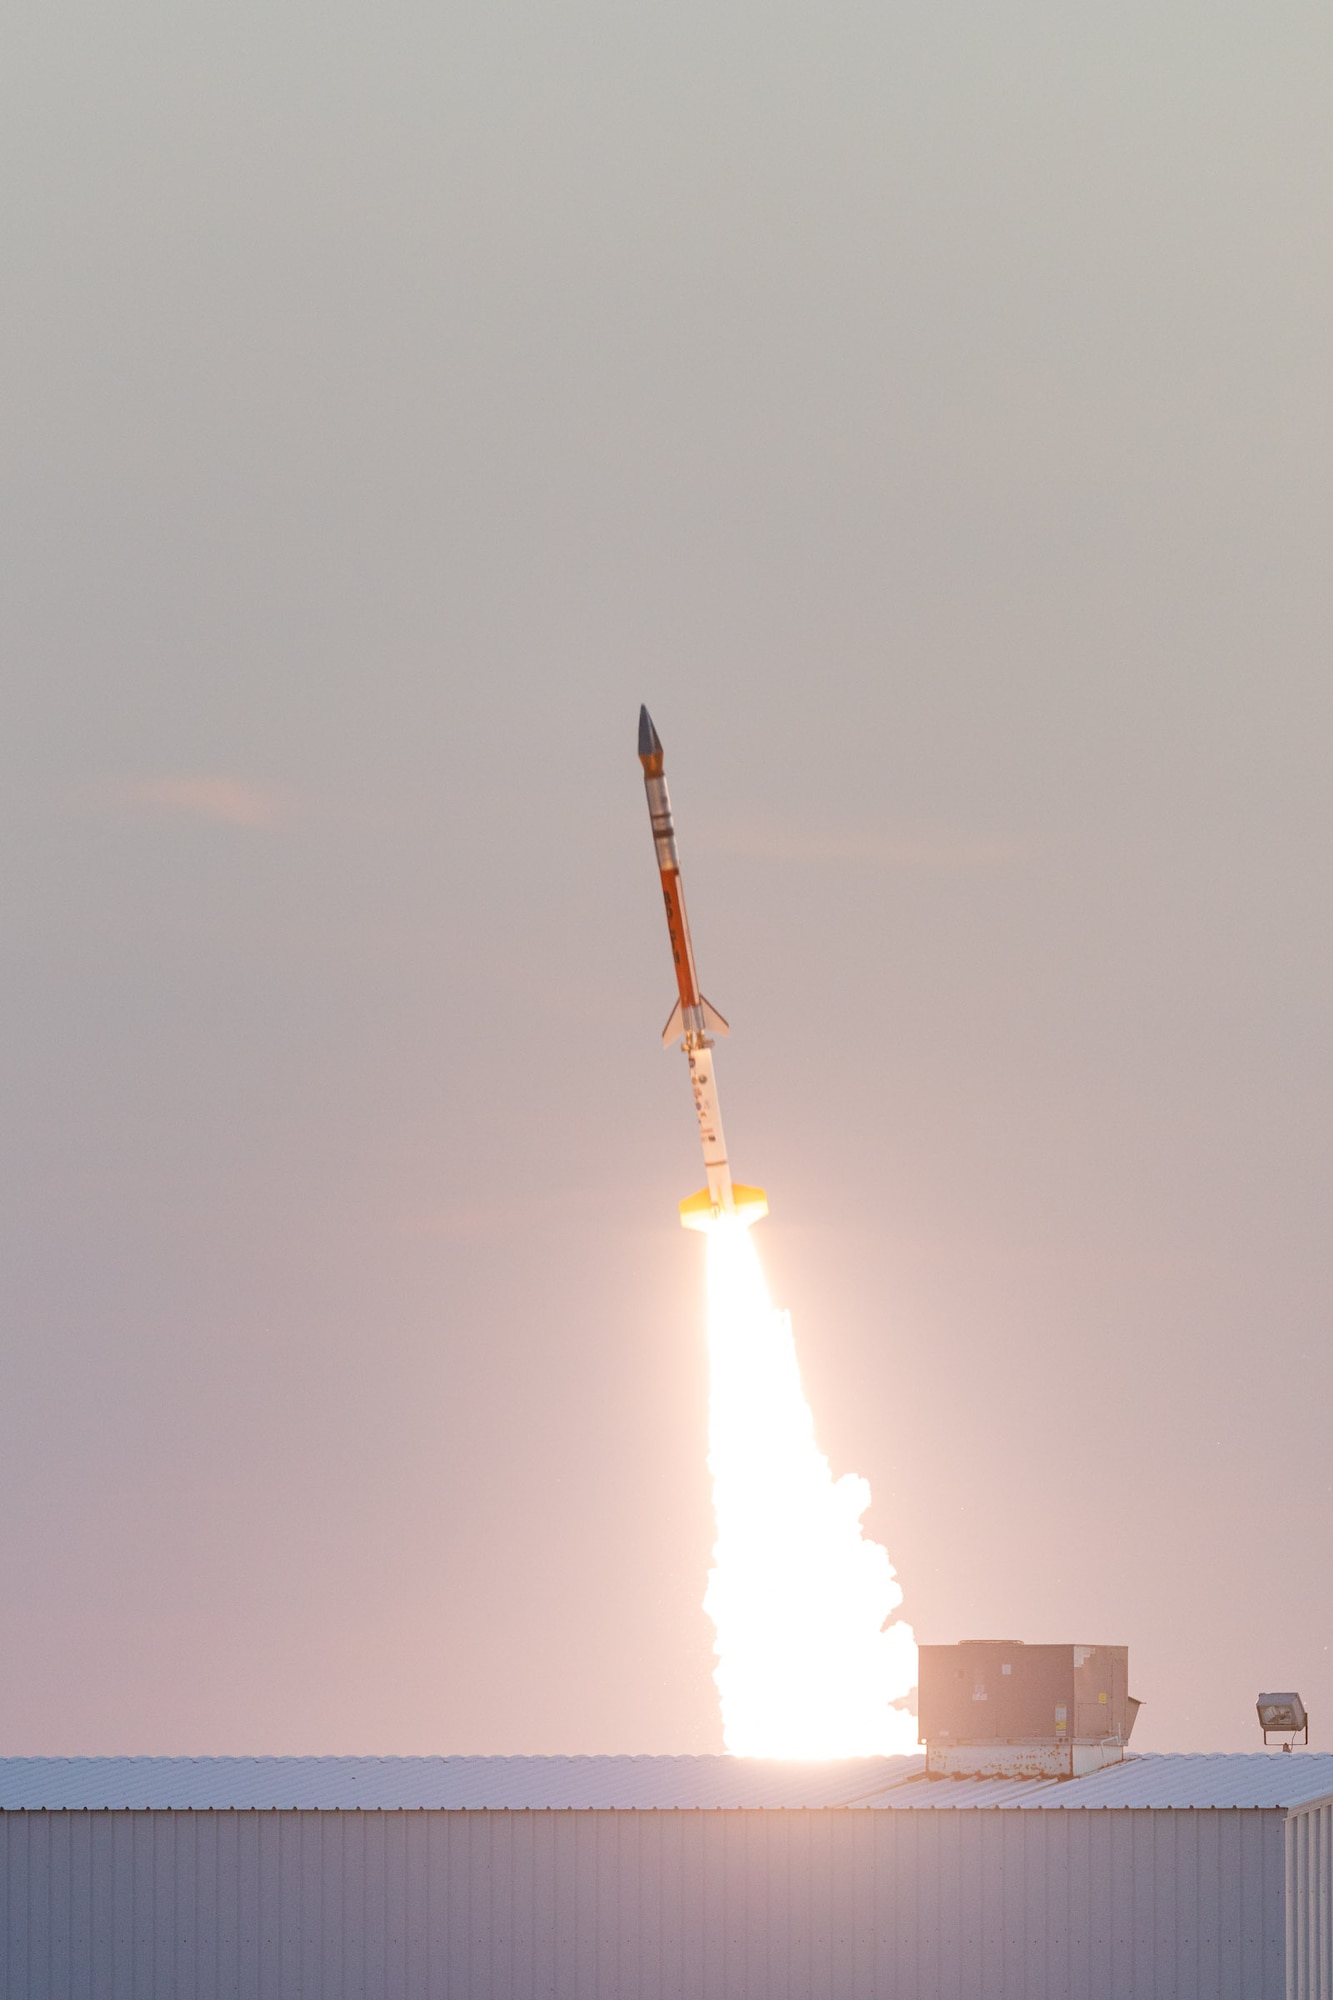 AFRL/AFOSR BOLT II Rocket launching from NASA/Wallops Flight Facility on March 21, 2022. NASA/Wallops photo/ Brian Bonsteel.